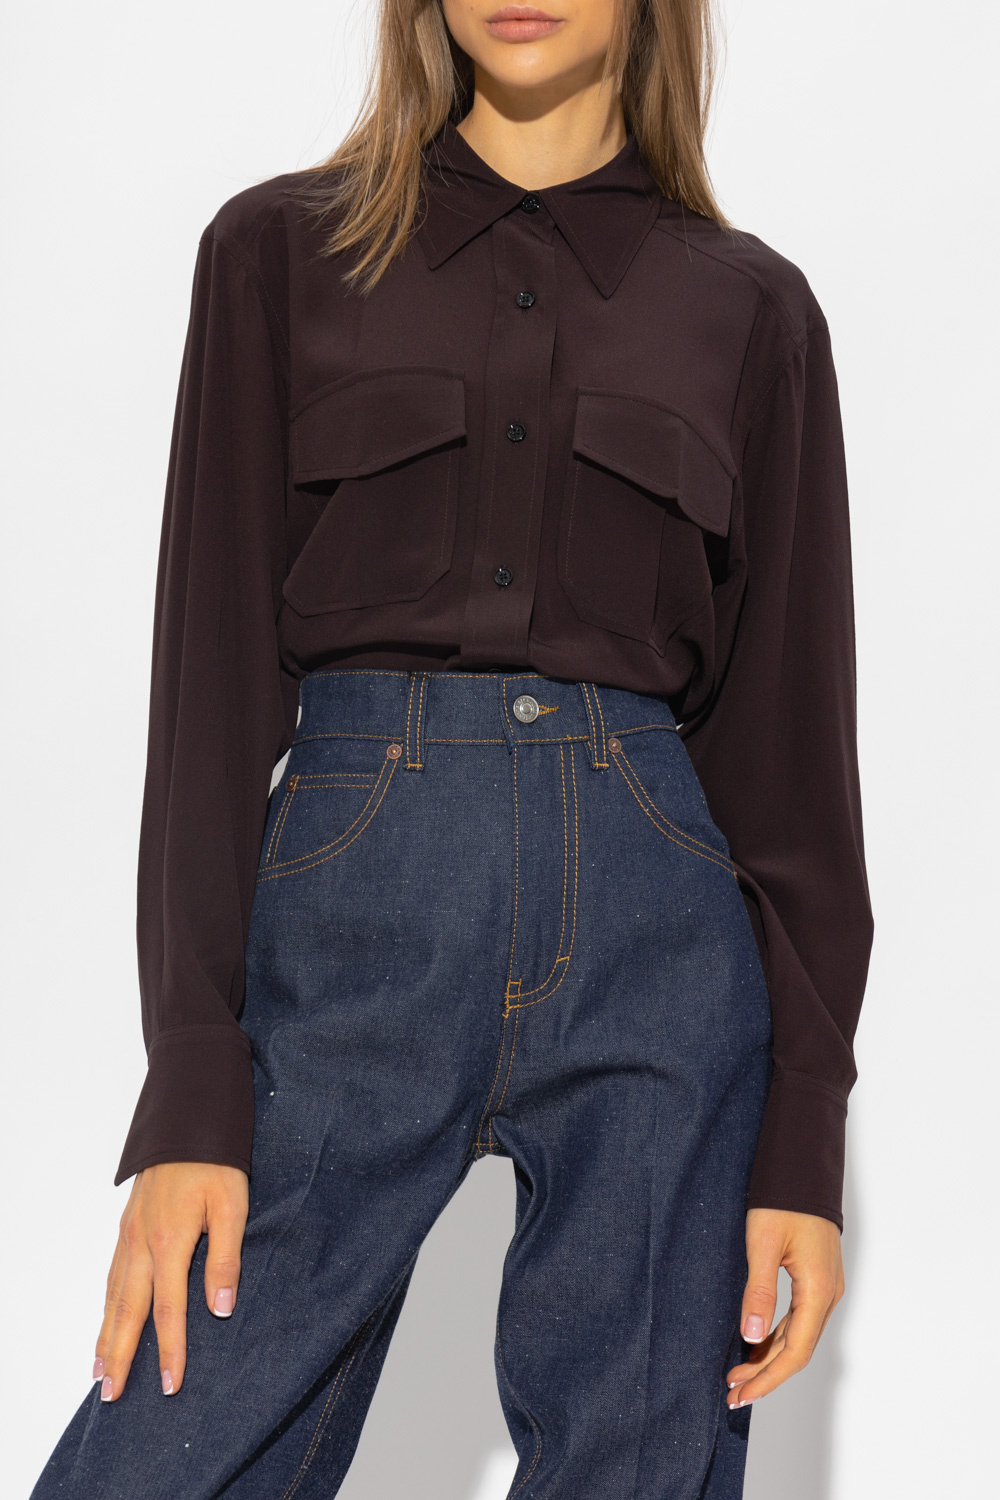 Victoria Beckham Silk sort shirt with pockets